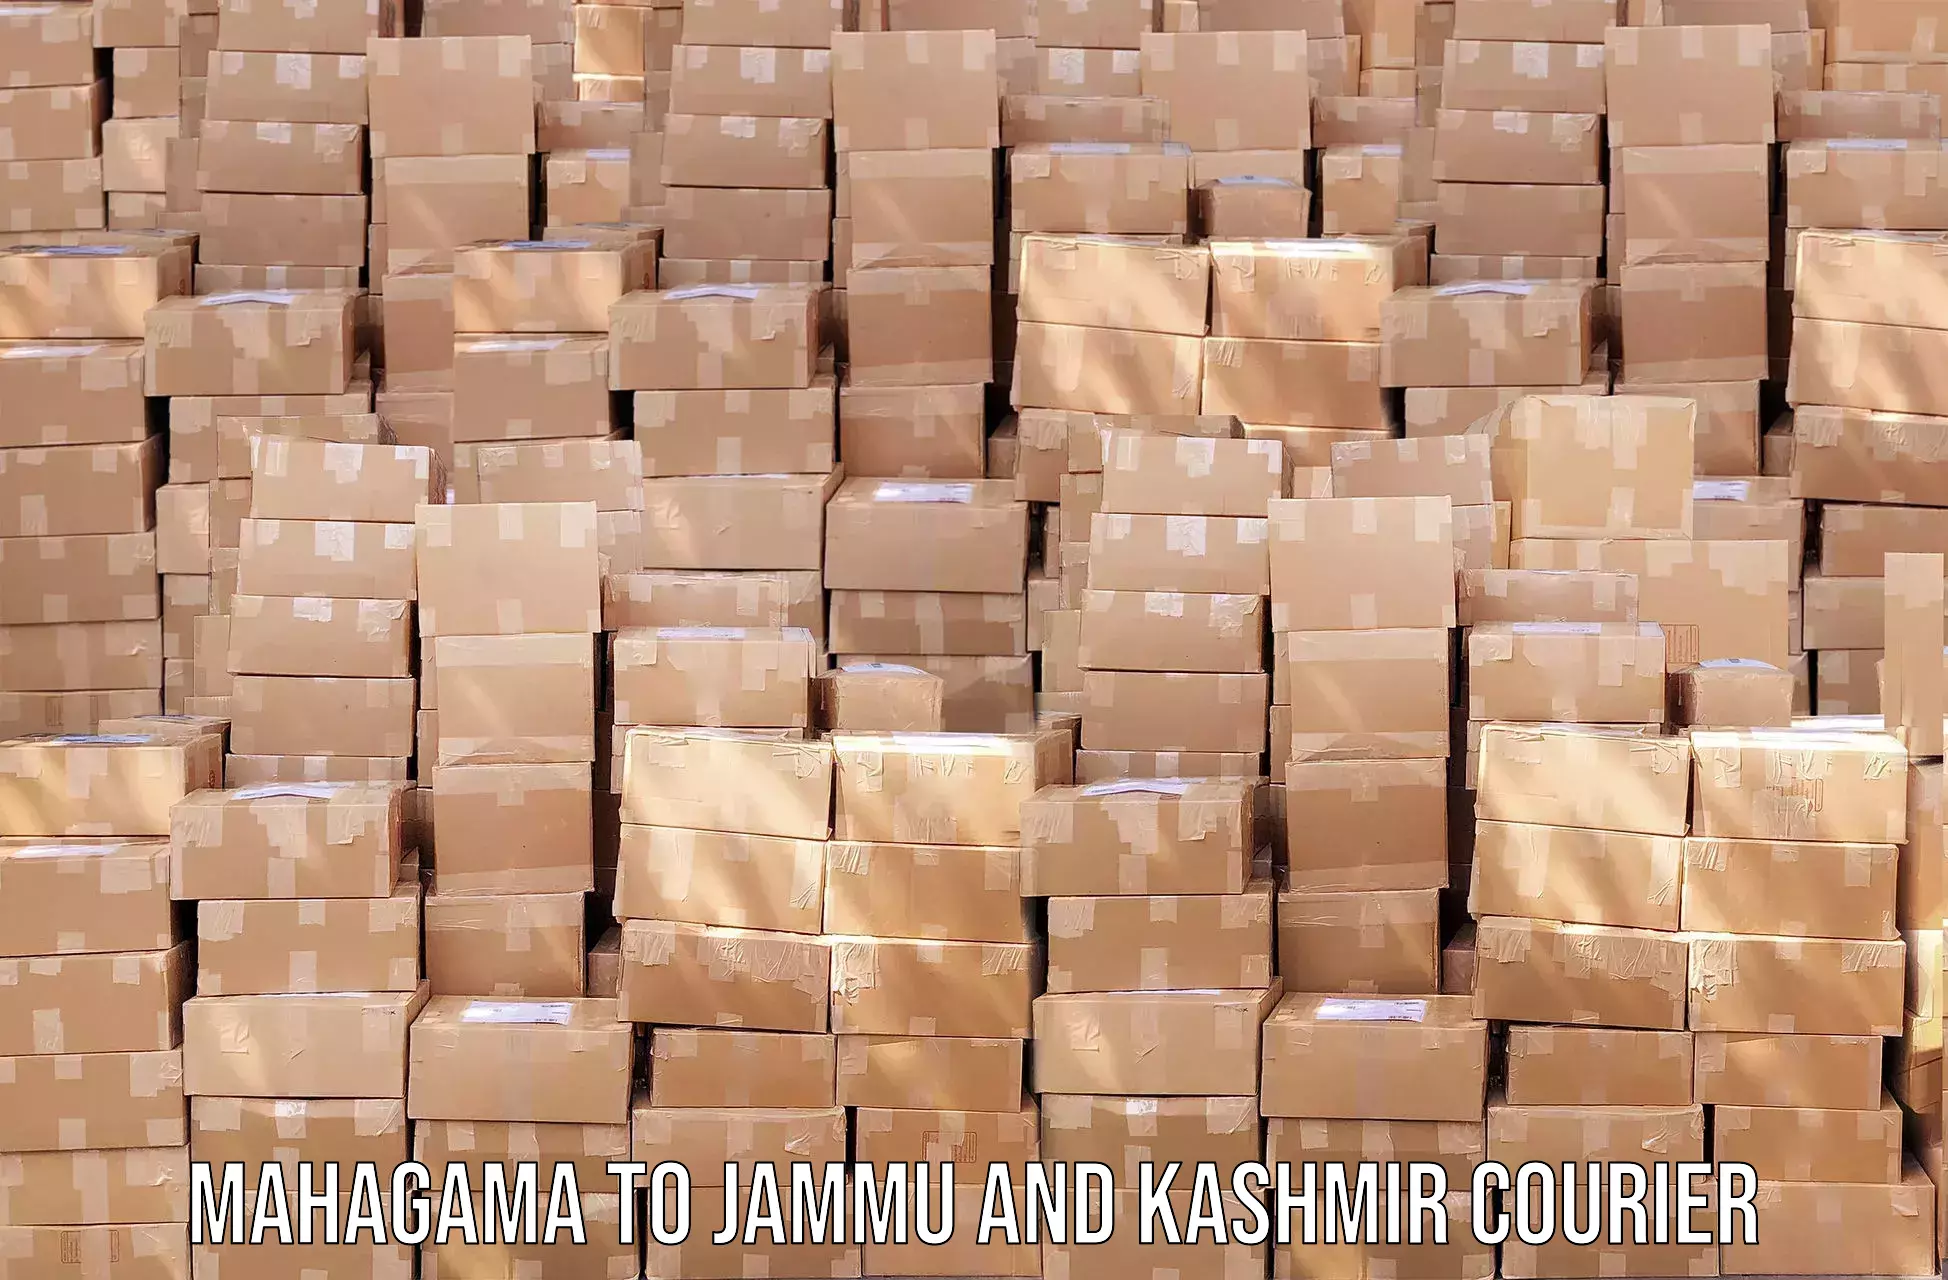 Courier service partnerships Mahagama to Jammu